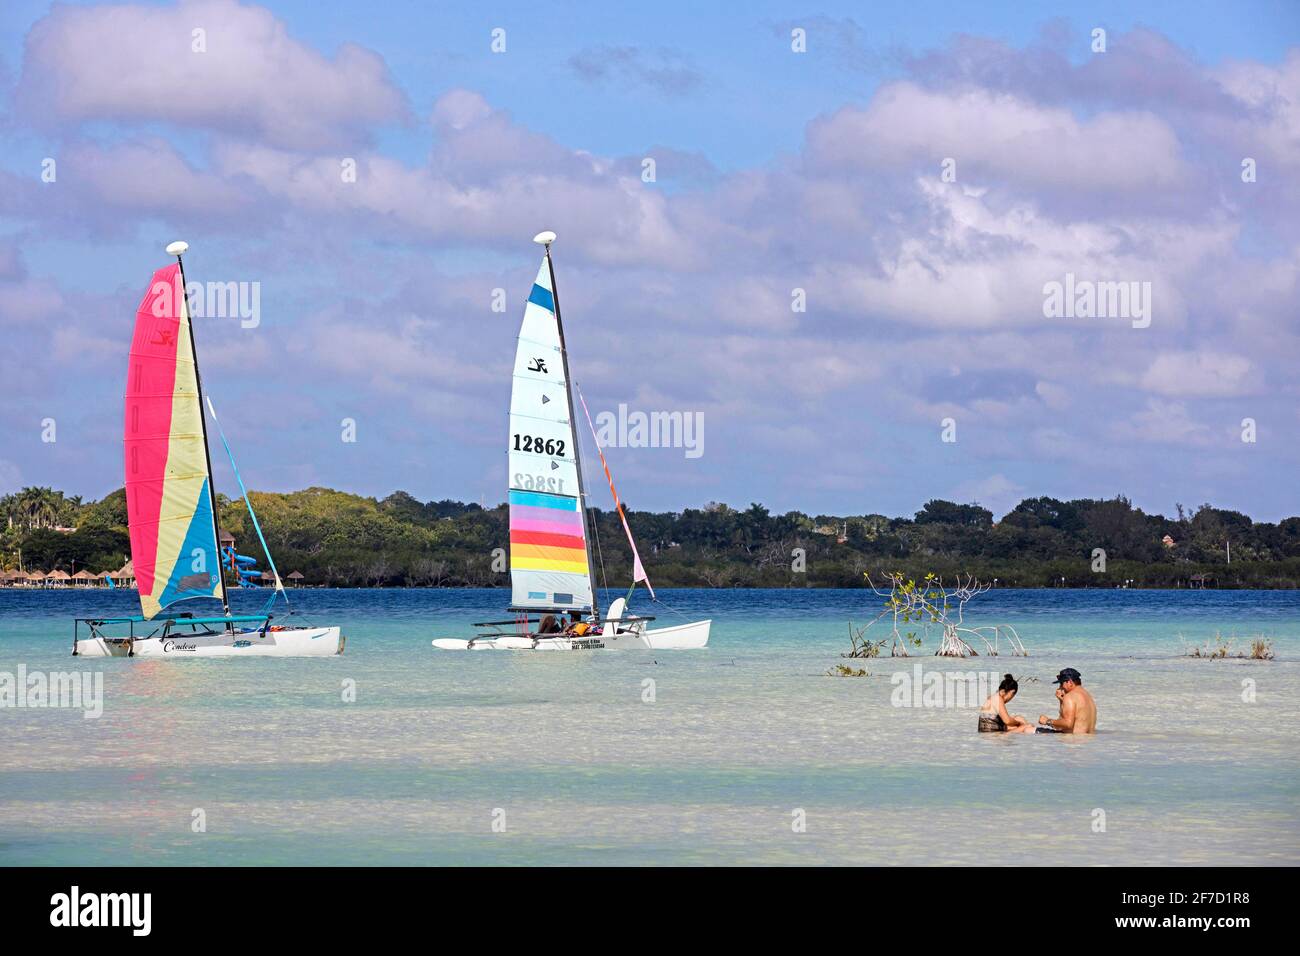 Tourists sitting in shallow water and two sailboats / catamarans sailing on Lake Bacalar / Laguna de Bacalar, Quintana Roo, Yucatán, Mexico Stock Photo